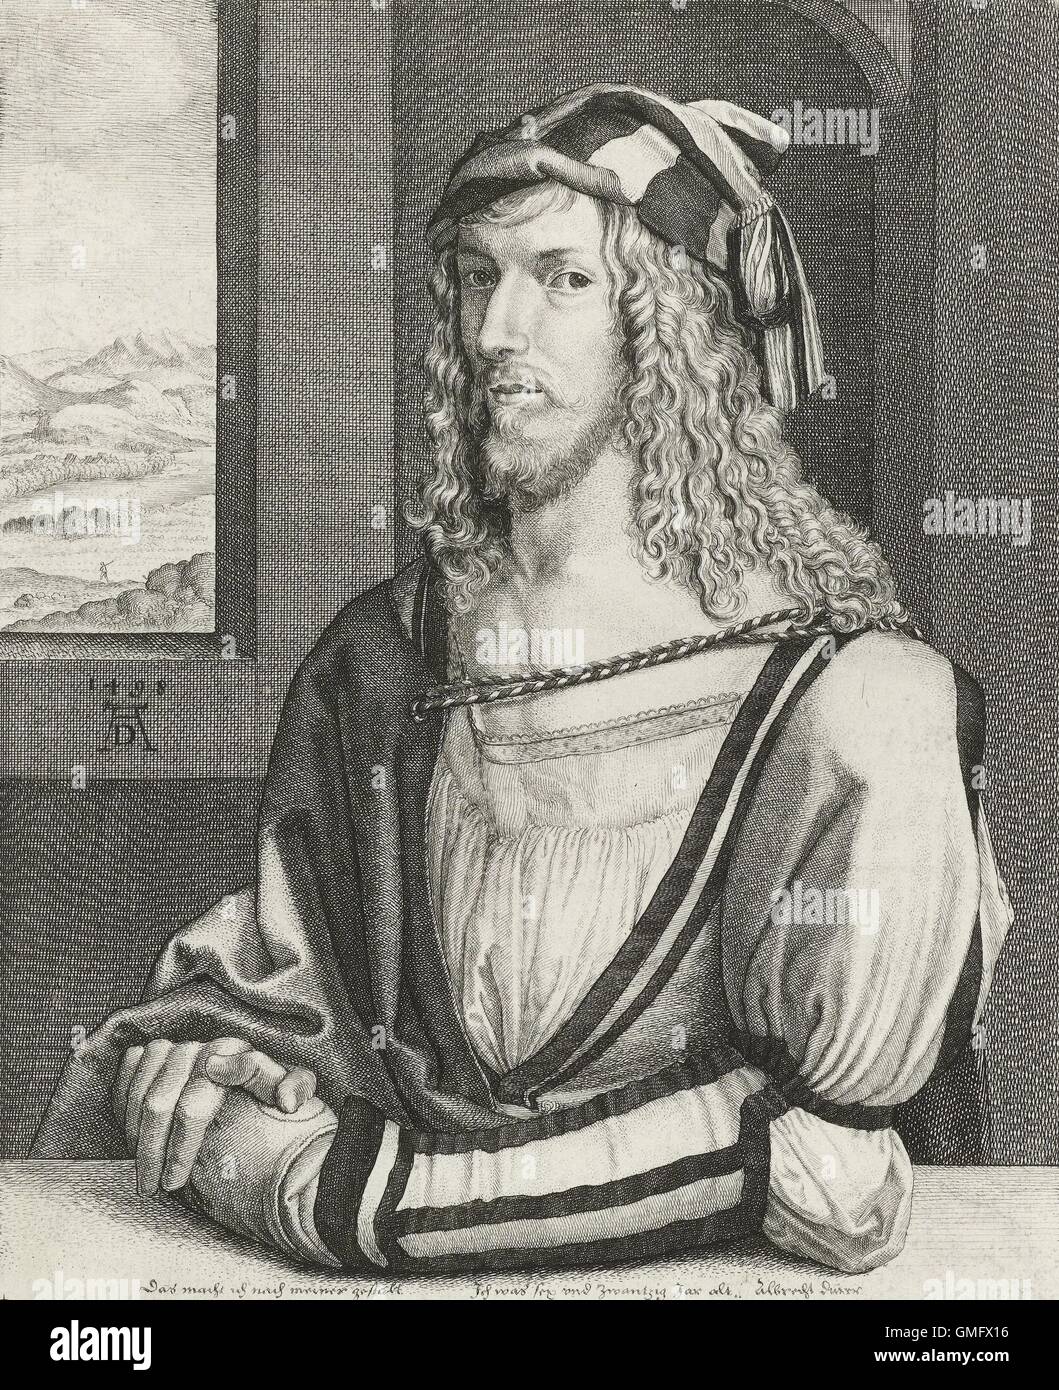 Ritratto di Albrecht Durer, da Wenceslaus Hollar, 1645, stampa belga, incisione su carta. Copiato da un originale autoritratto di 1498 da Dürer a 26 anni (BSLOC 2016 2 122) Foto Stock